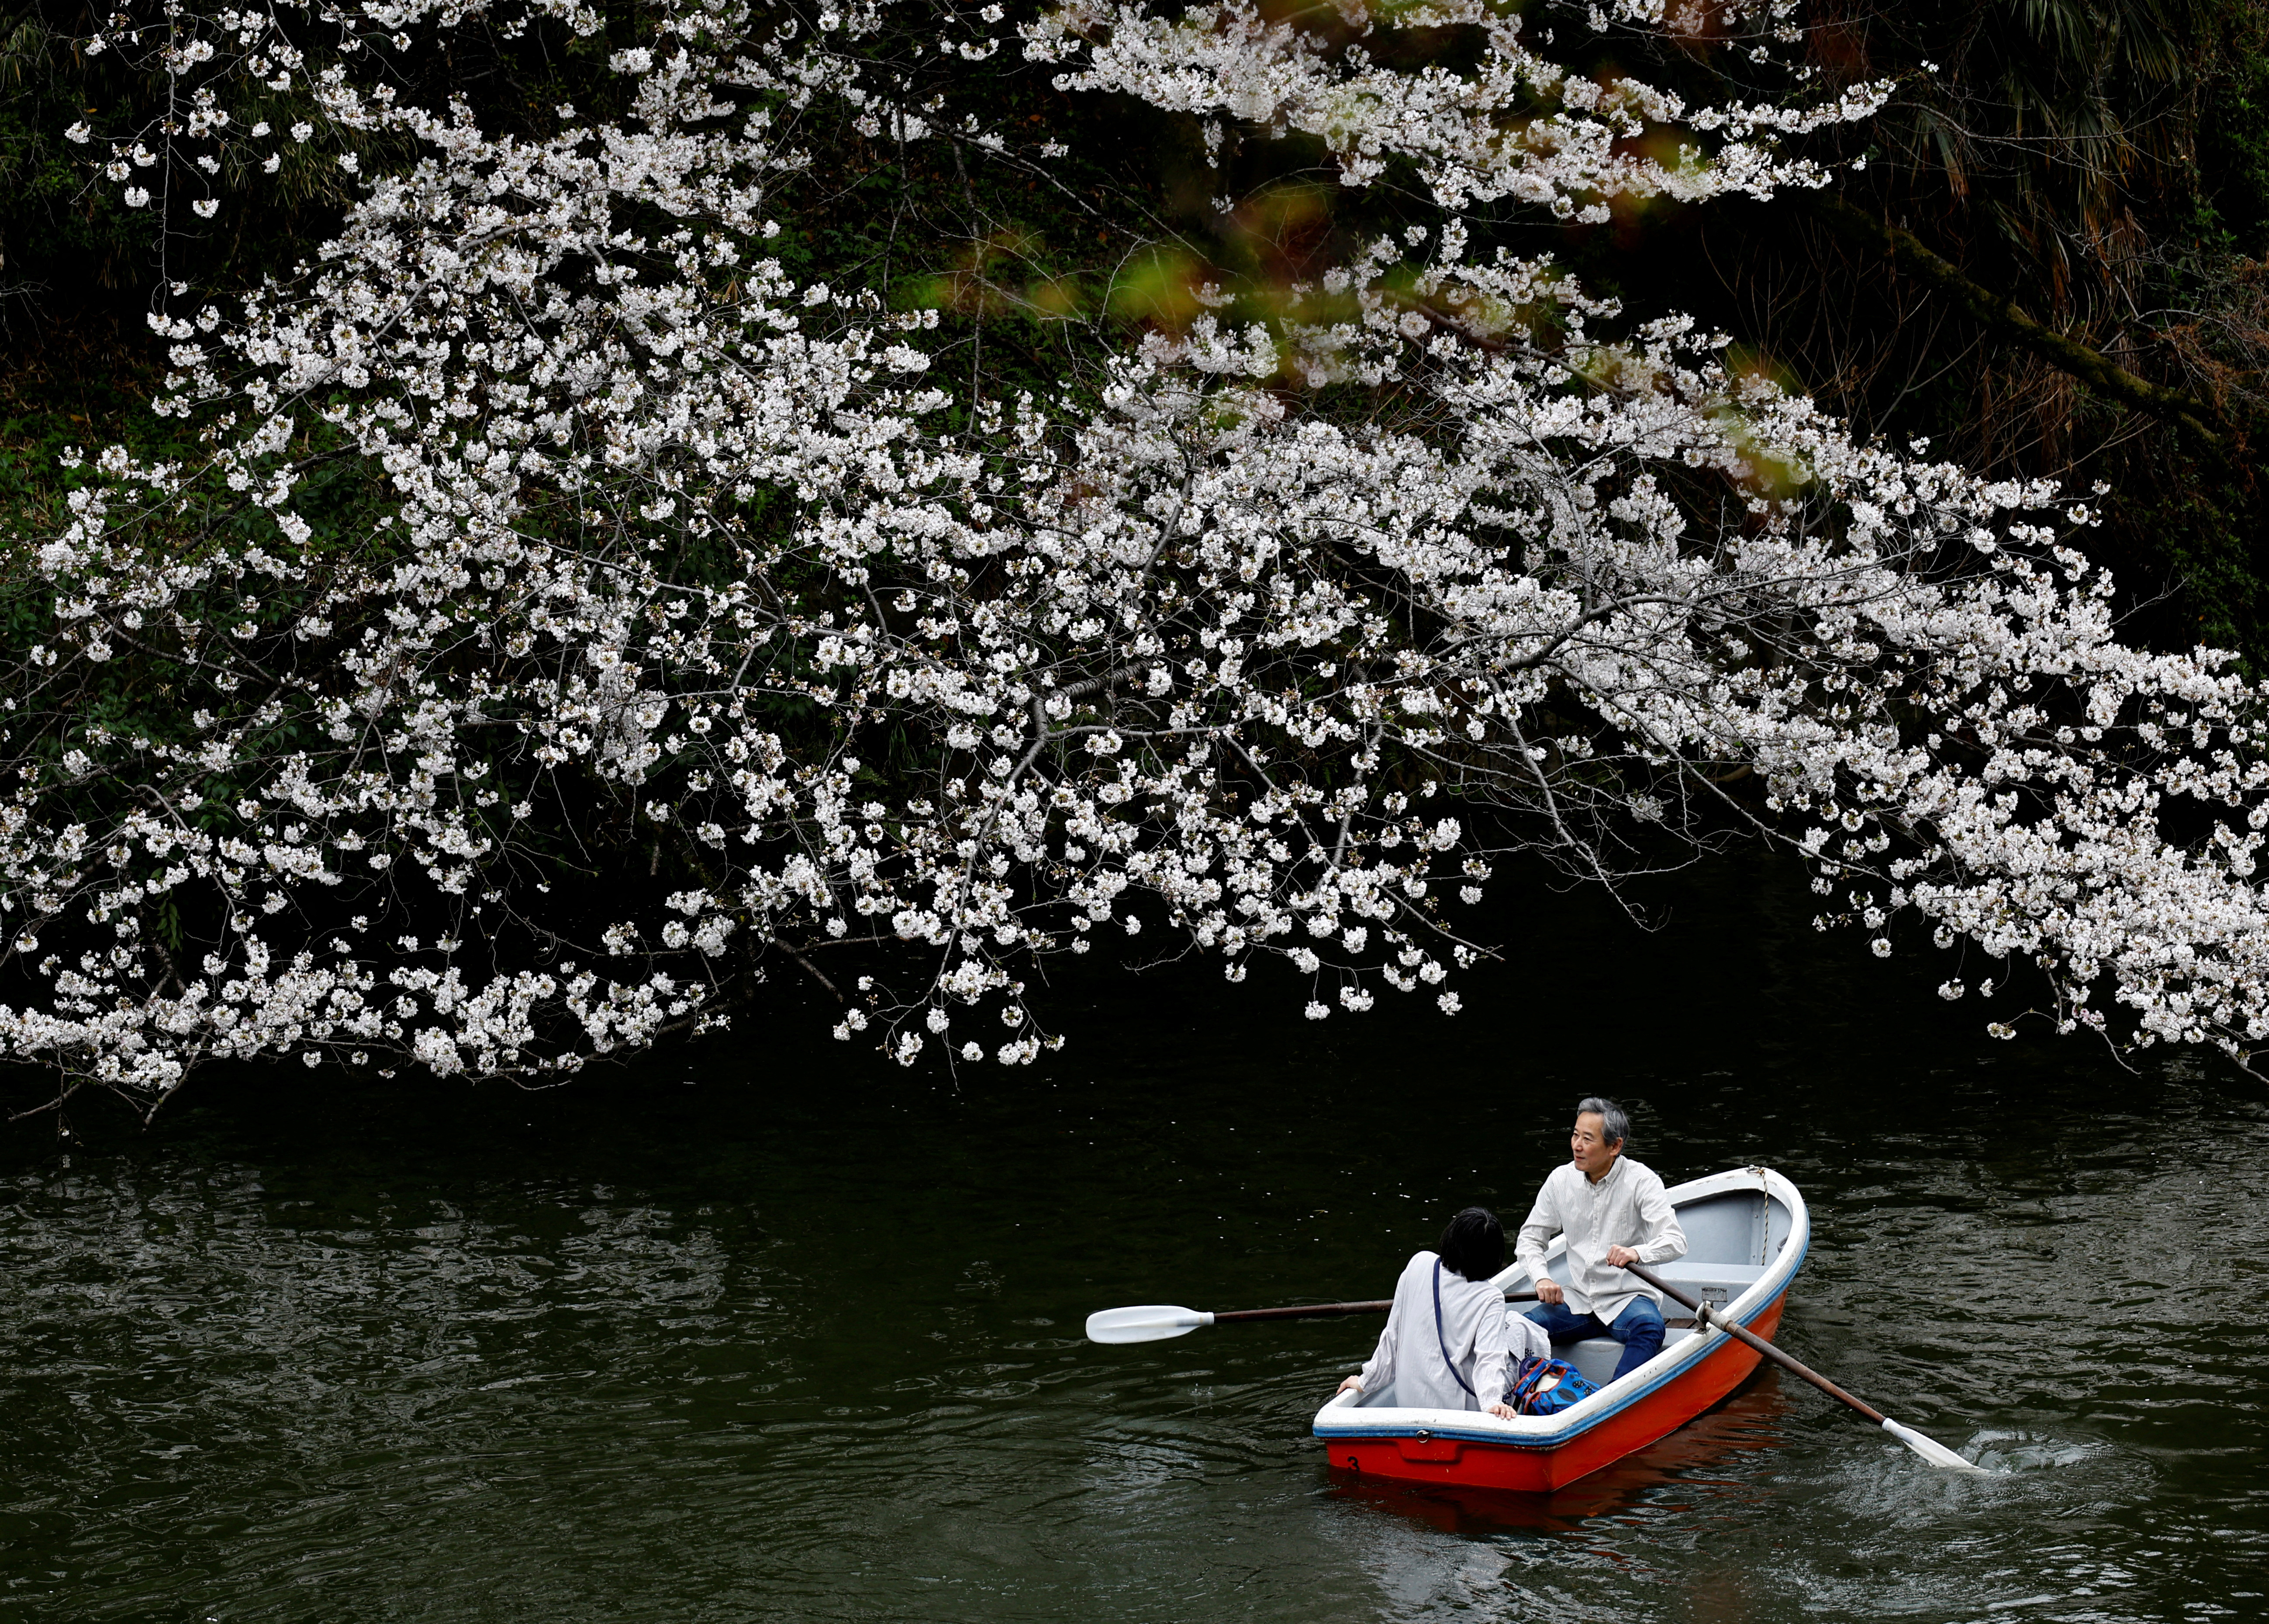 Visitors ride a boat next to cherry blossoms at Chidorigafuchi Park in Tokyo